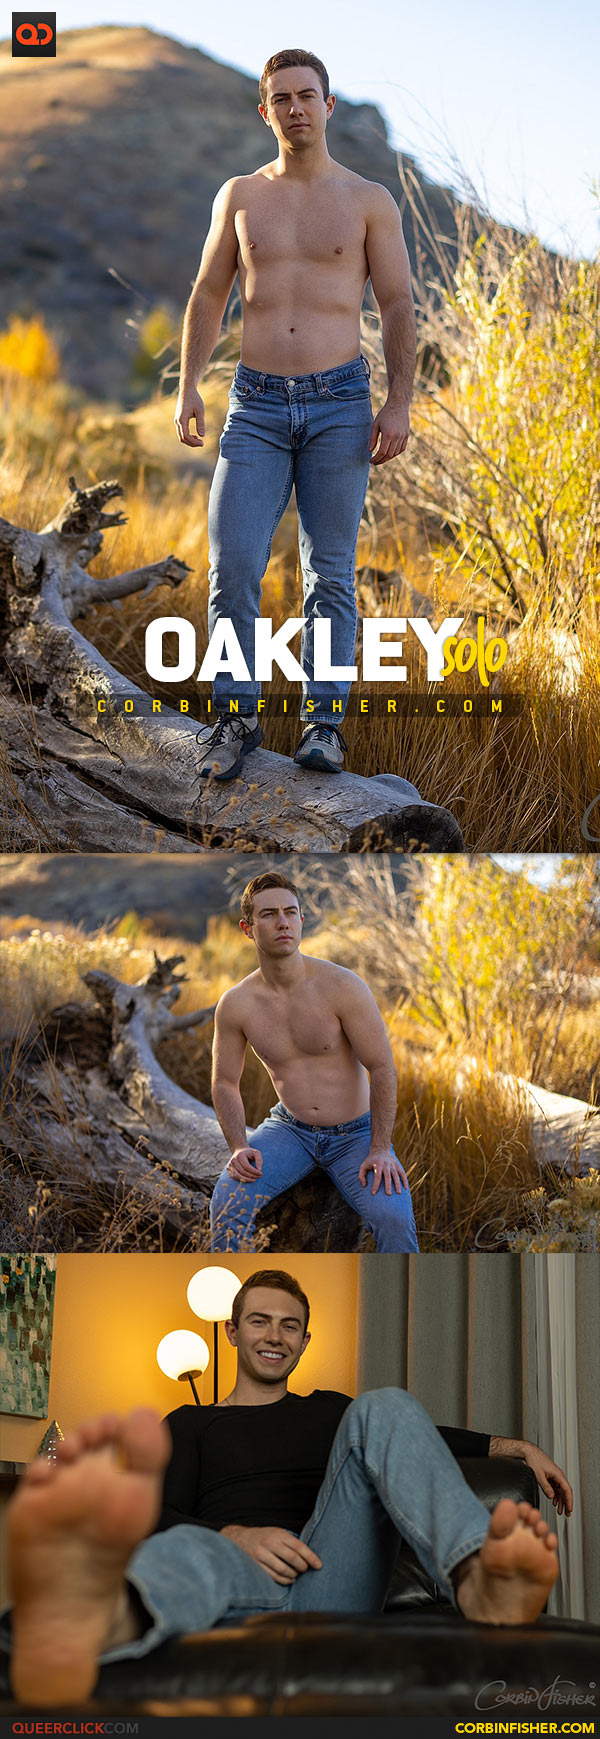 Corbin Fisher: Introducing Oakley